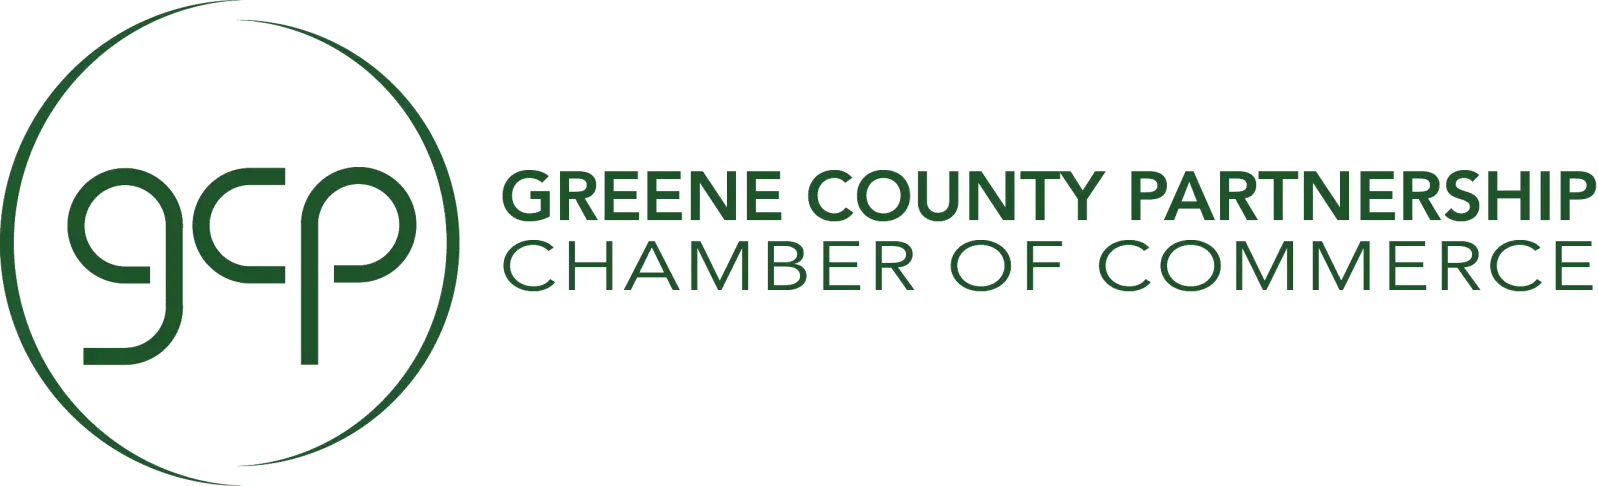 Greene-County-Partnership-Logo-Final